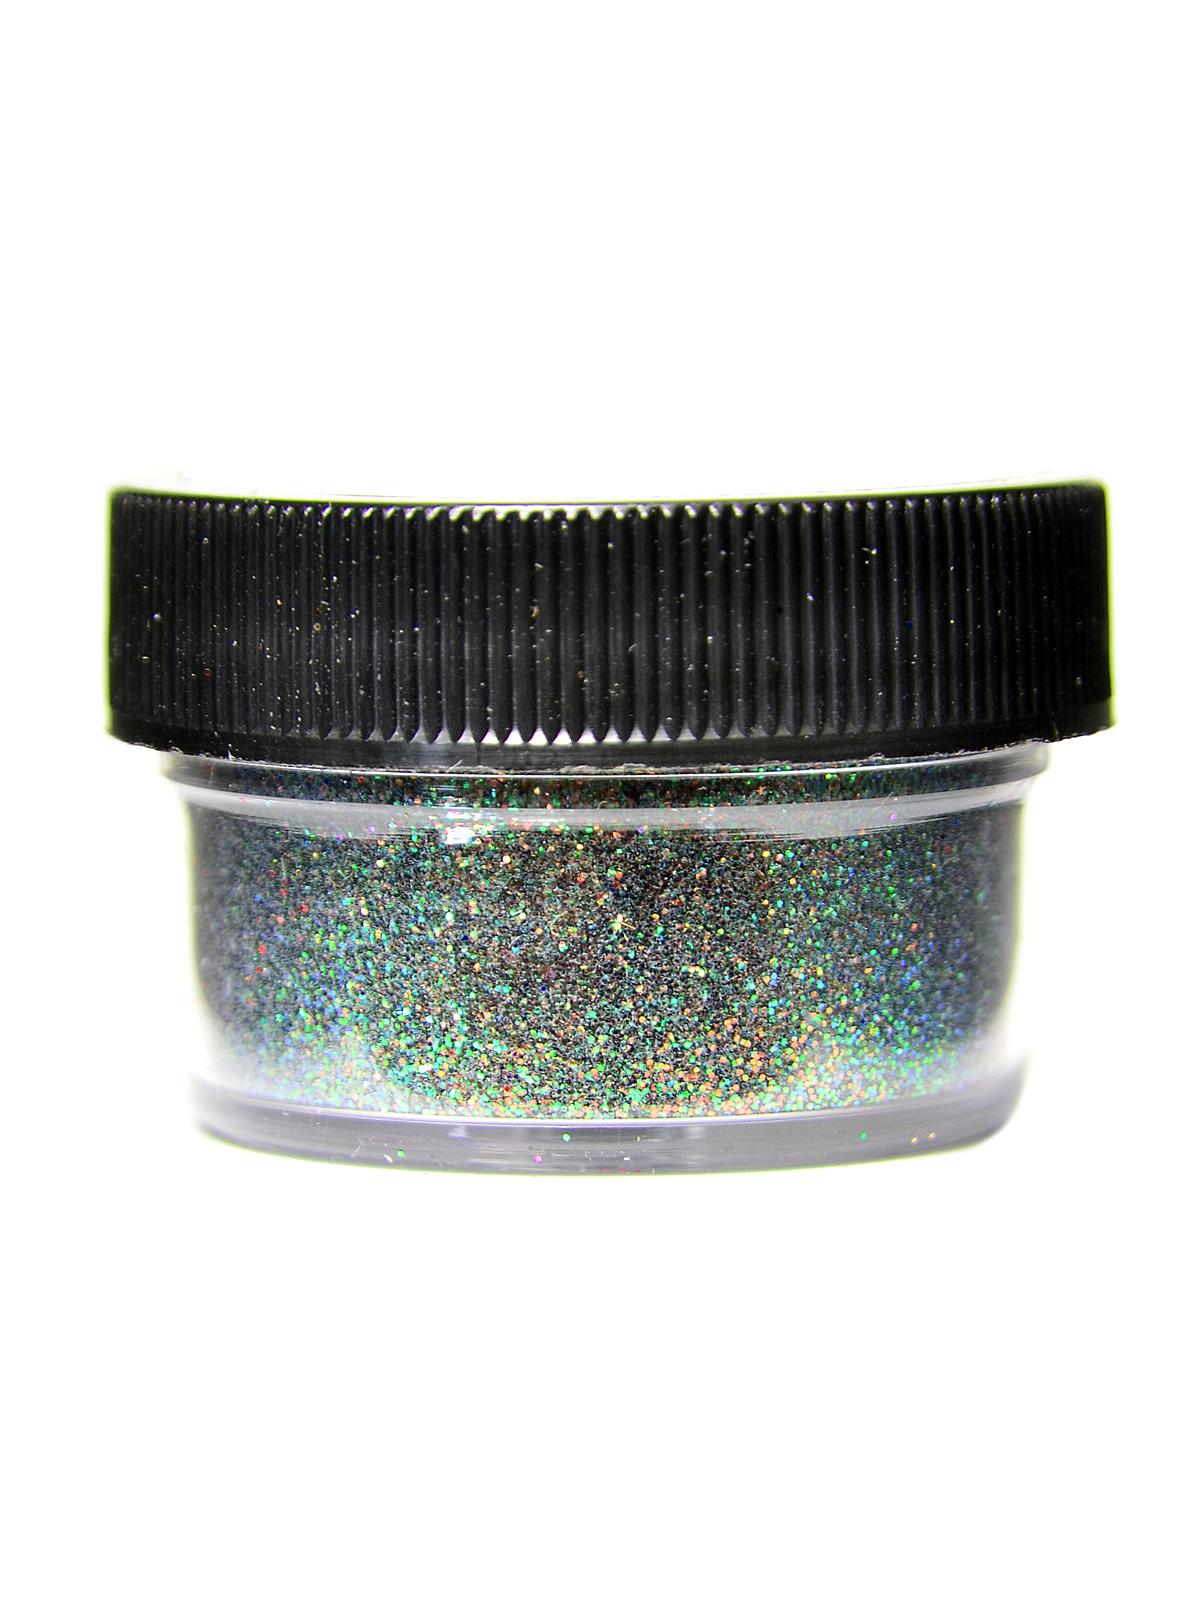 Ultrafine Transparent Glitter Green Briar 1 2 Oz. Jar